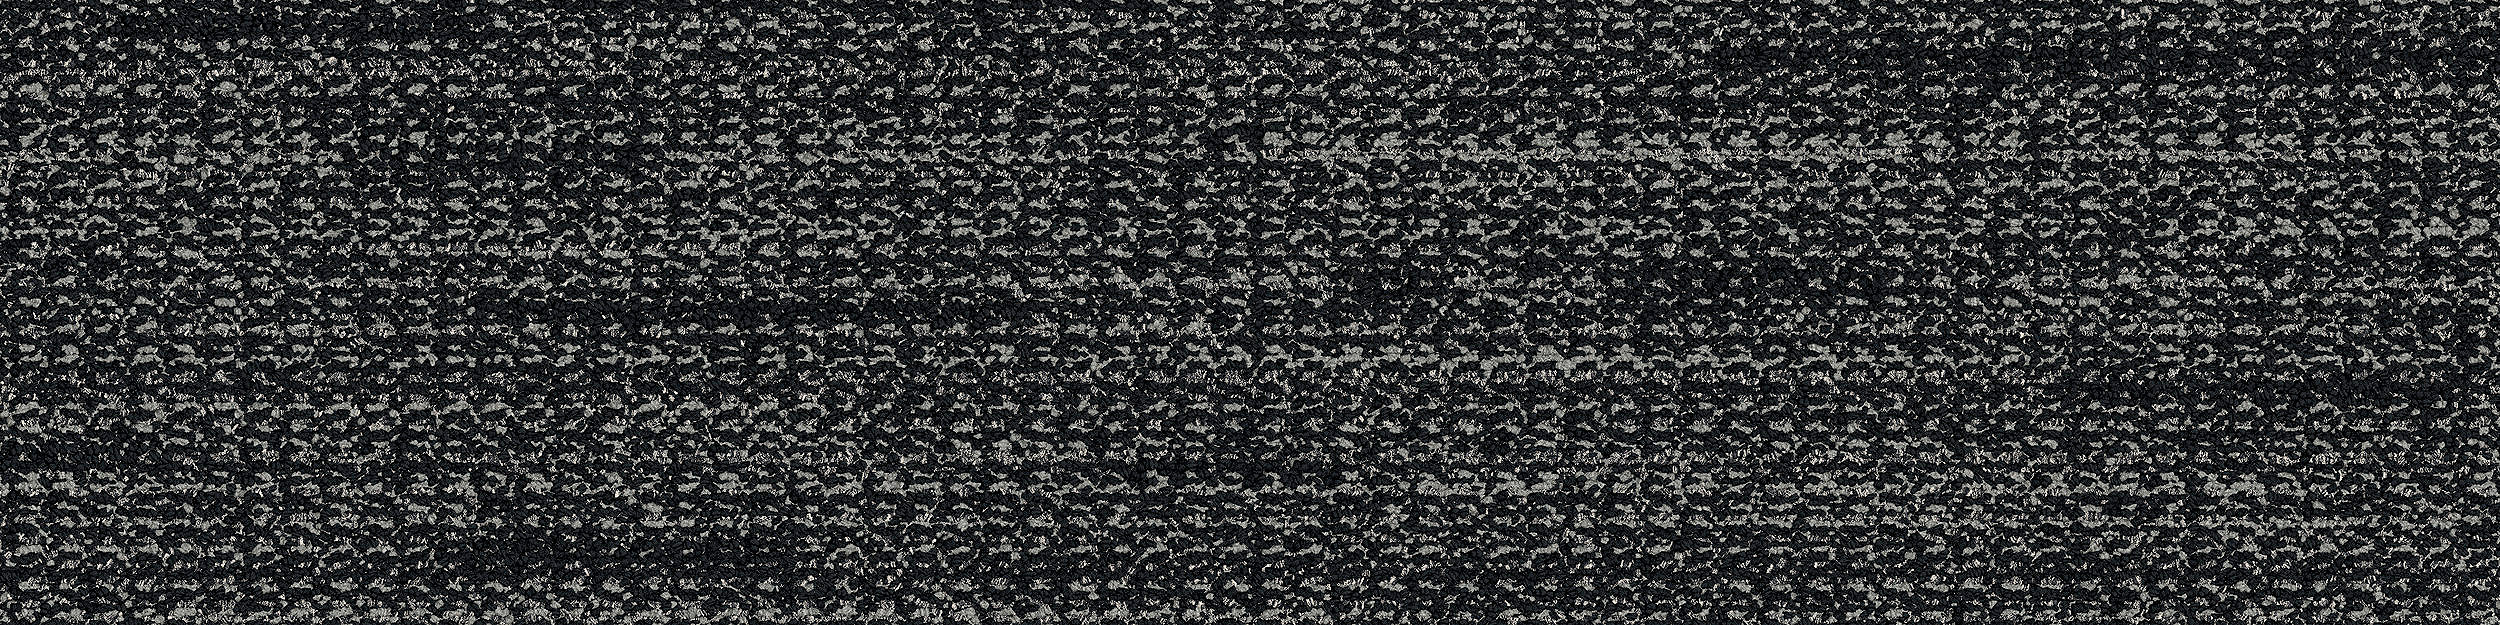 WW870 Carpet Tile In Black Weft imagen número 9